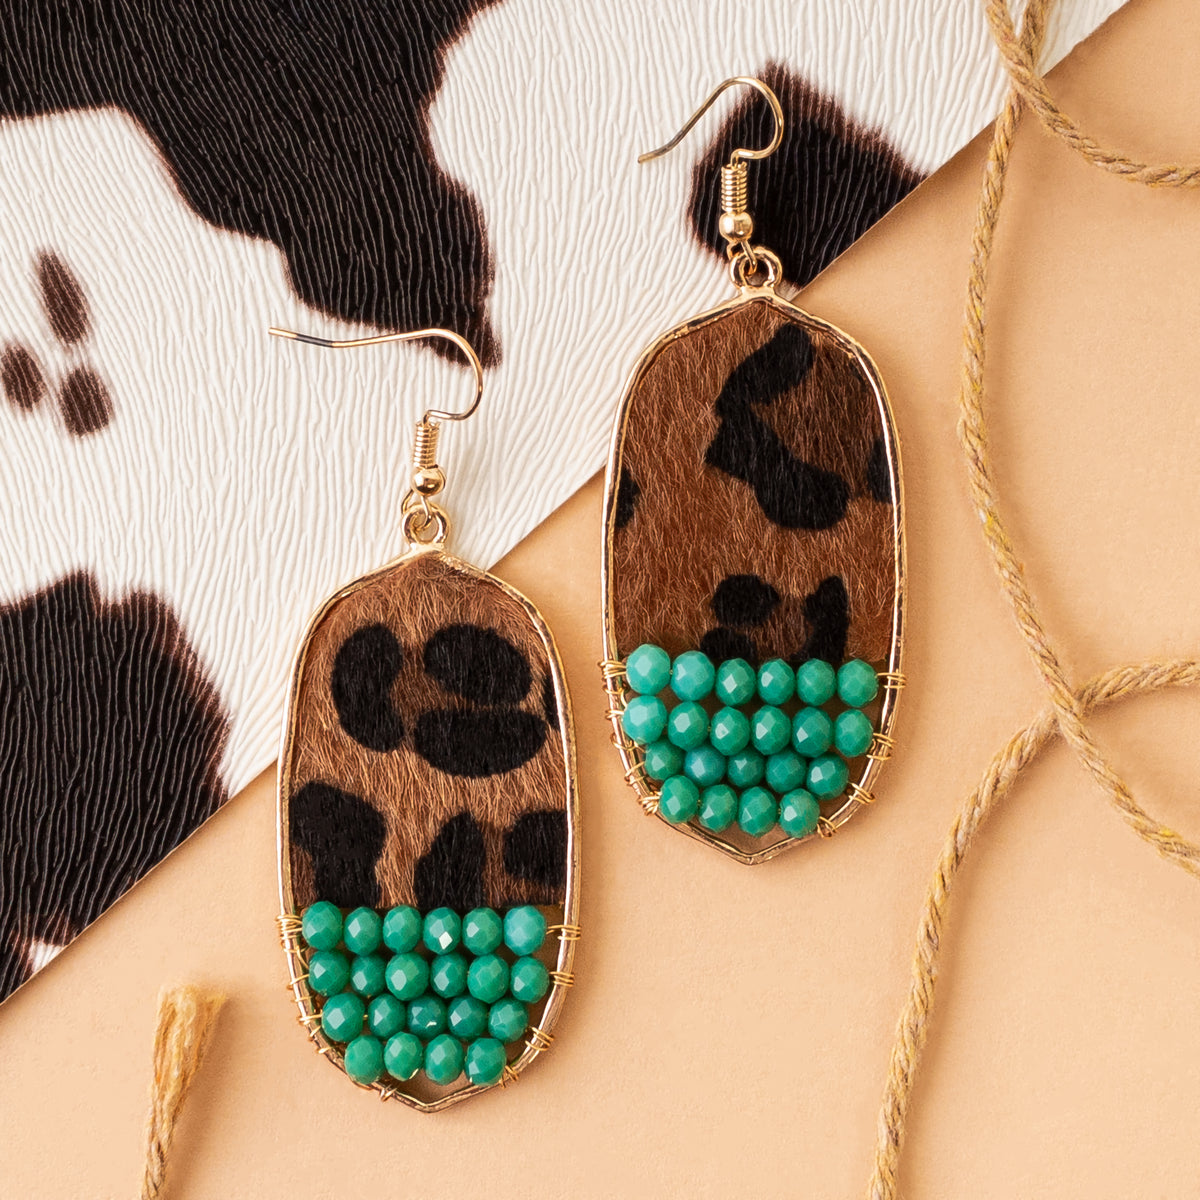 734058 - Animal Hide Earrings - Turquoise - Fashion Jewelry Wholesale